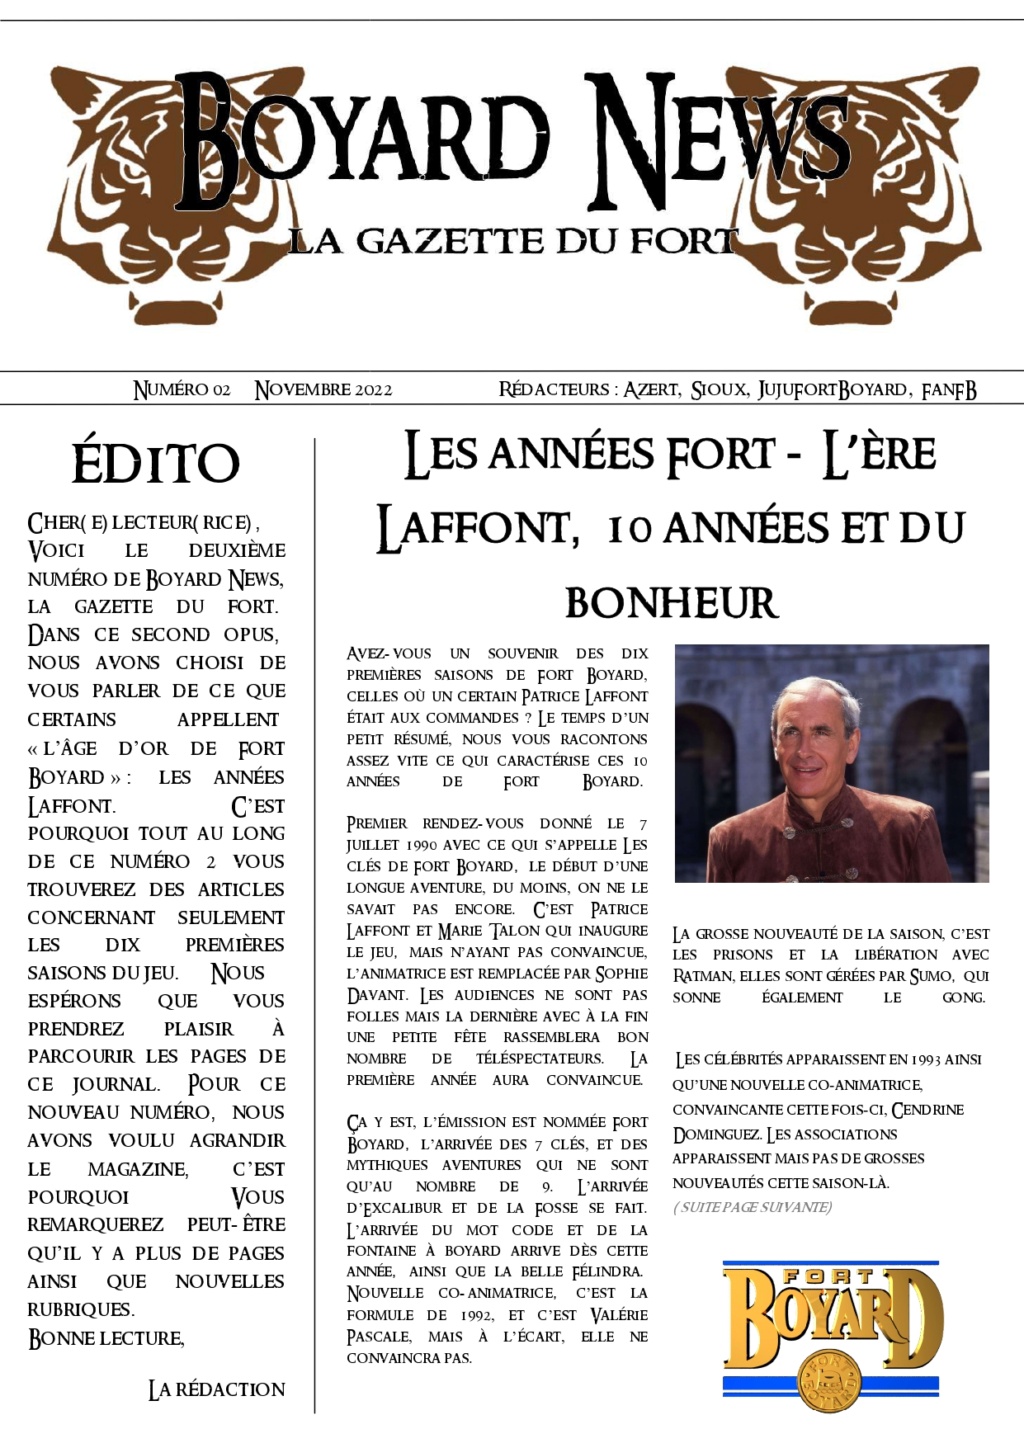 Création de Boyard News, la gazette du fort - Page 5 Premiz10